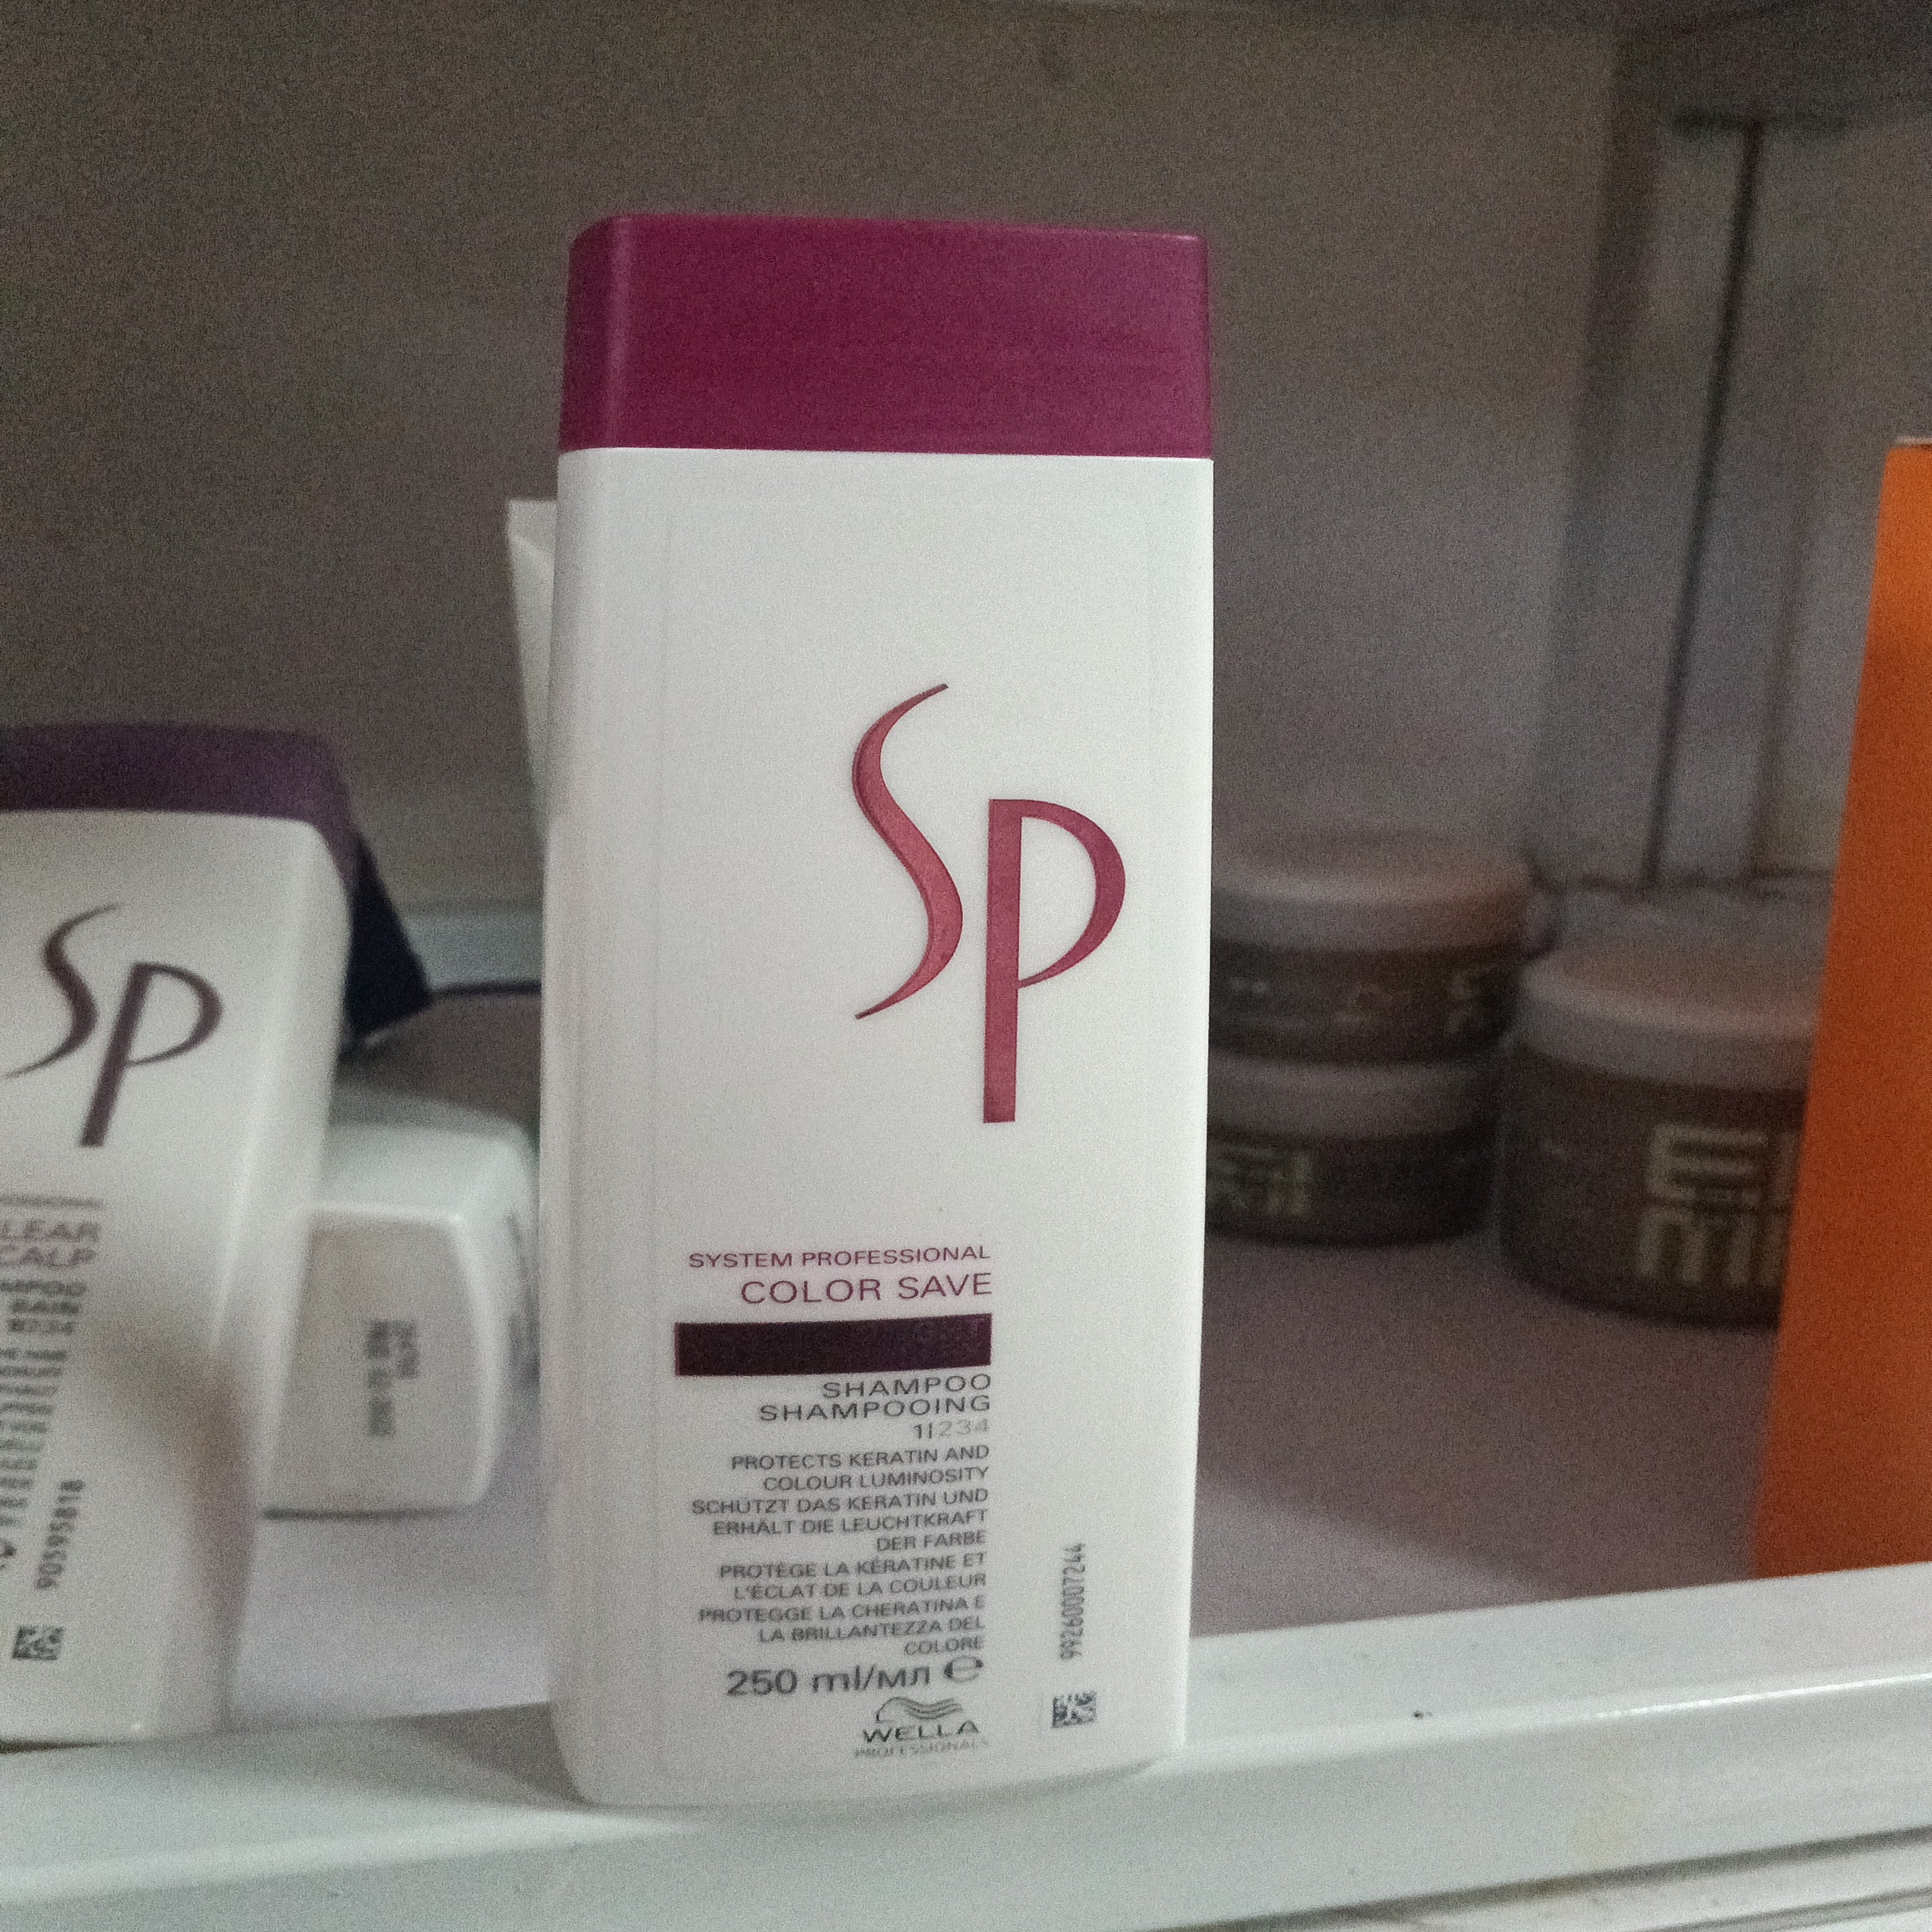 SP System Professional Color Save shampoo (250ml)